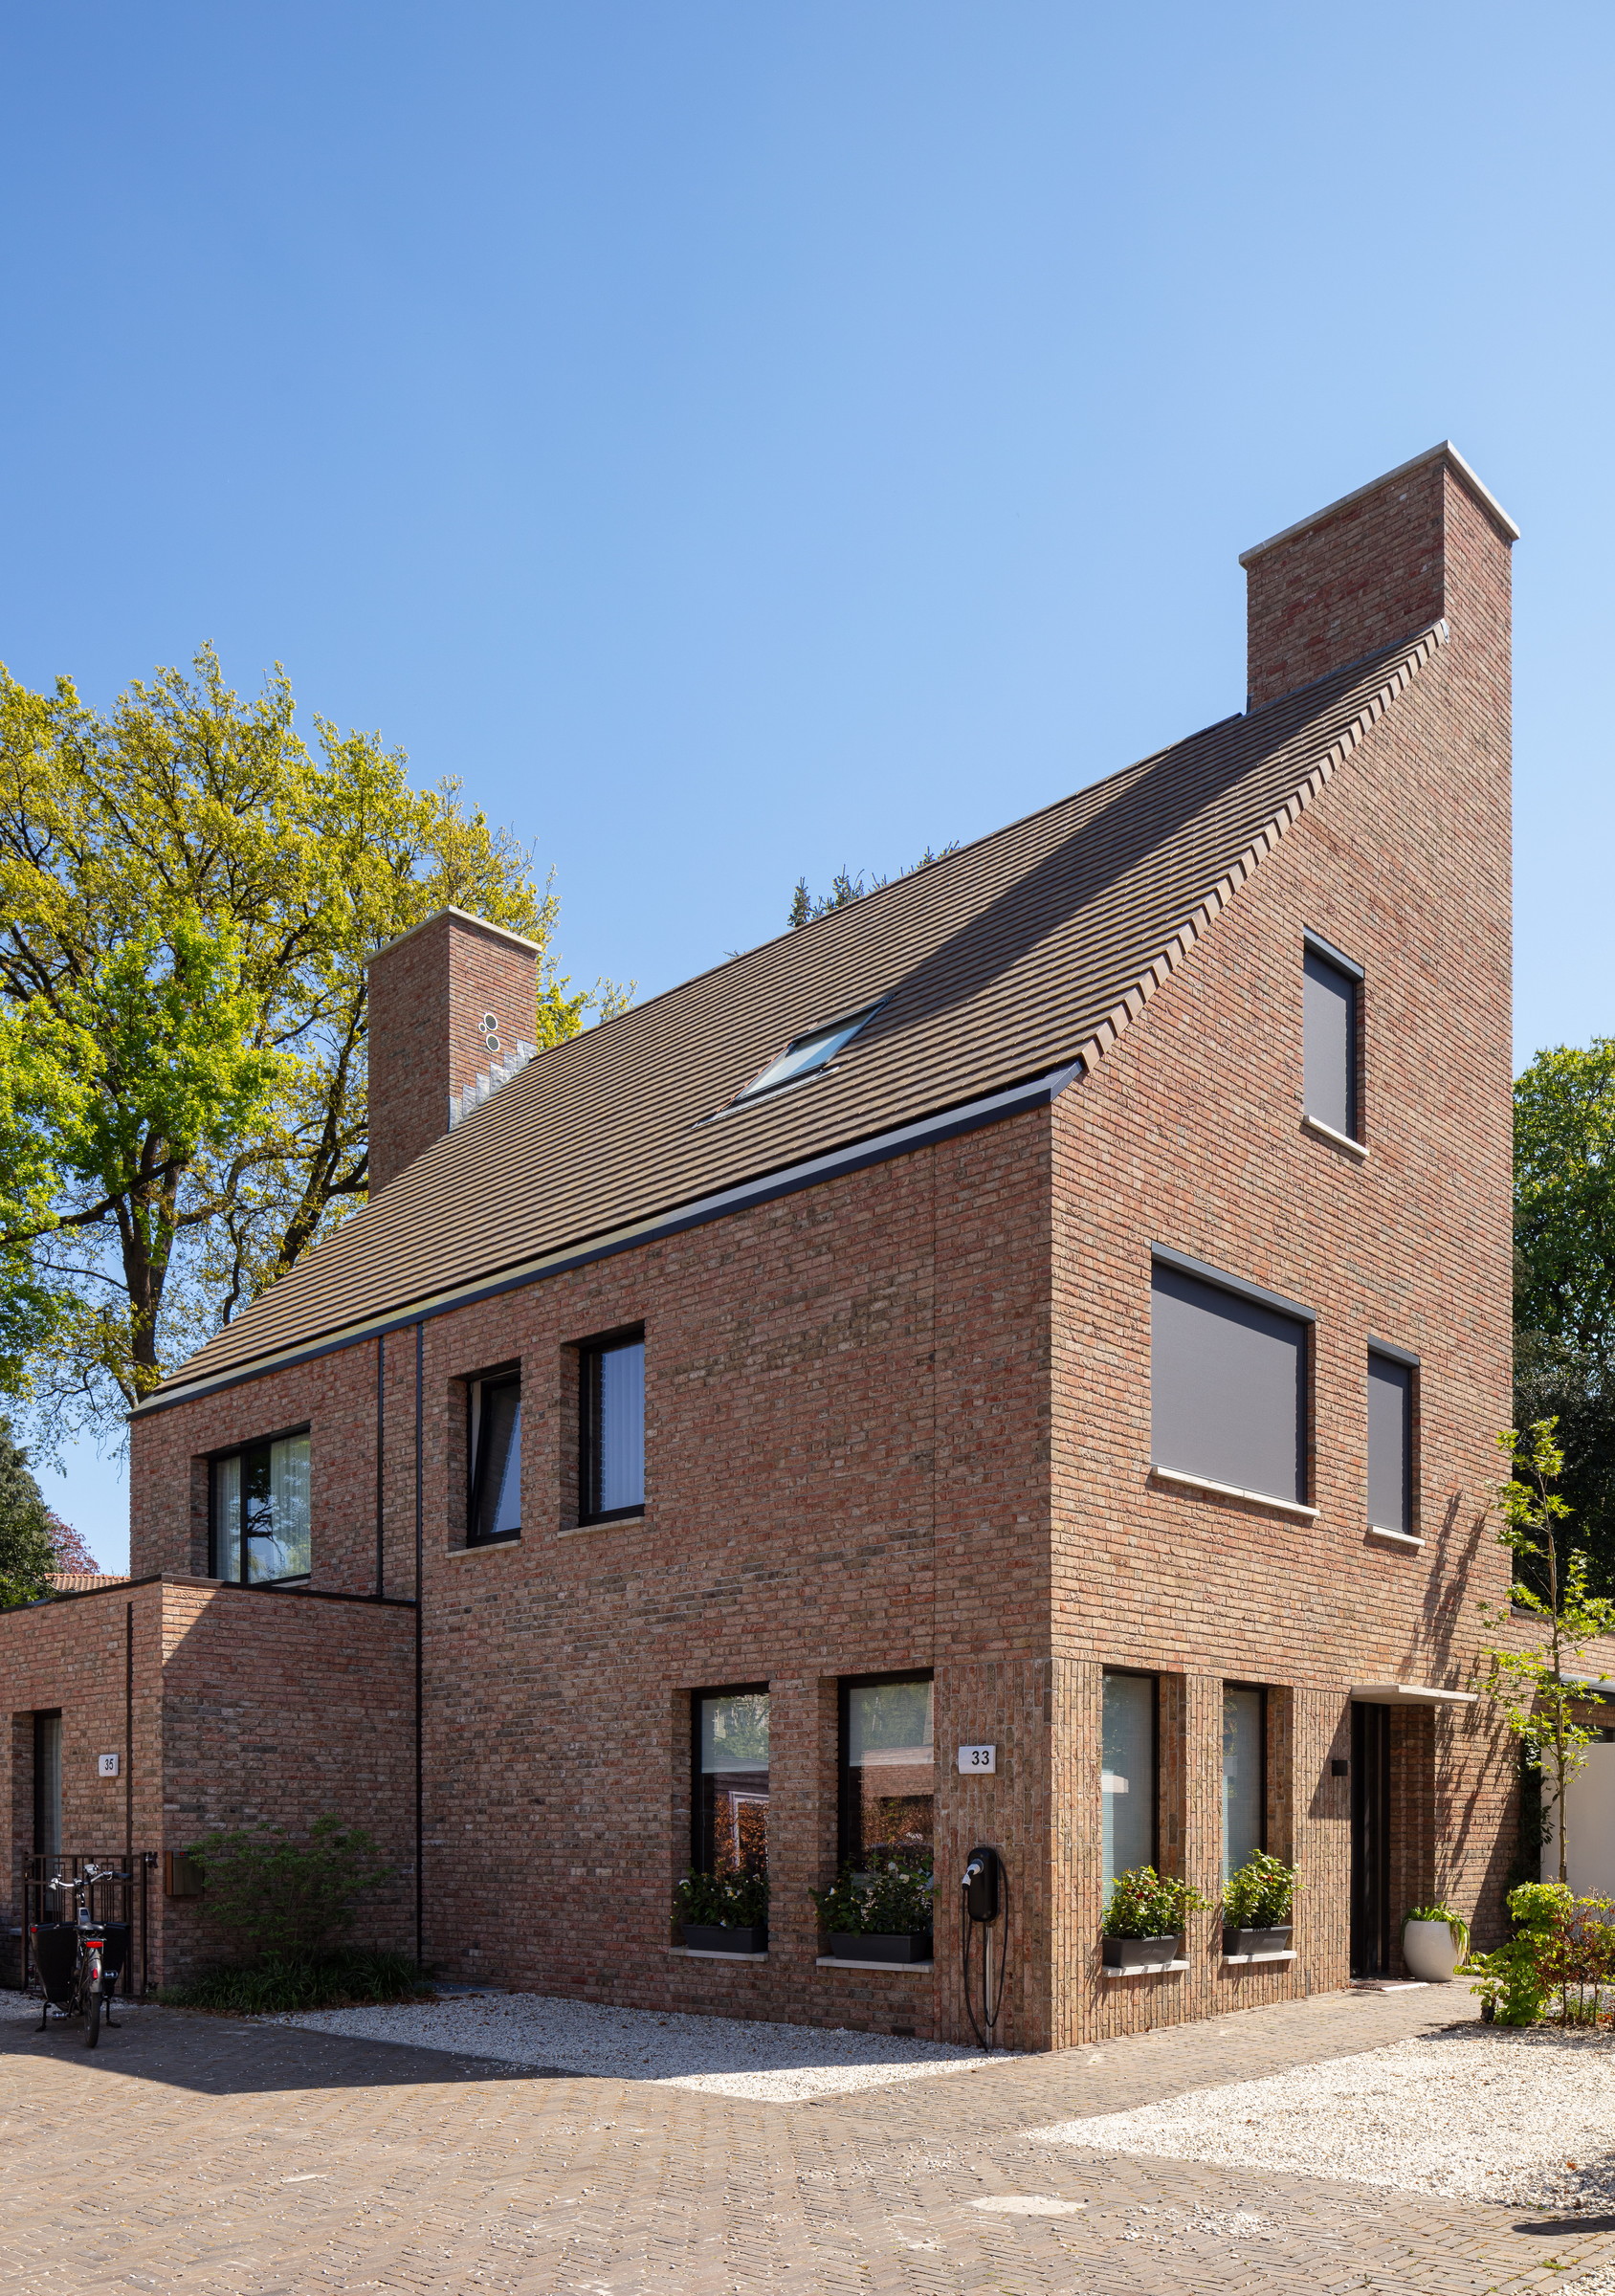 111-Zecc_Architecten-Monnickenhof-Amersfoort-housing.JPG